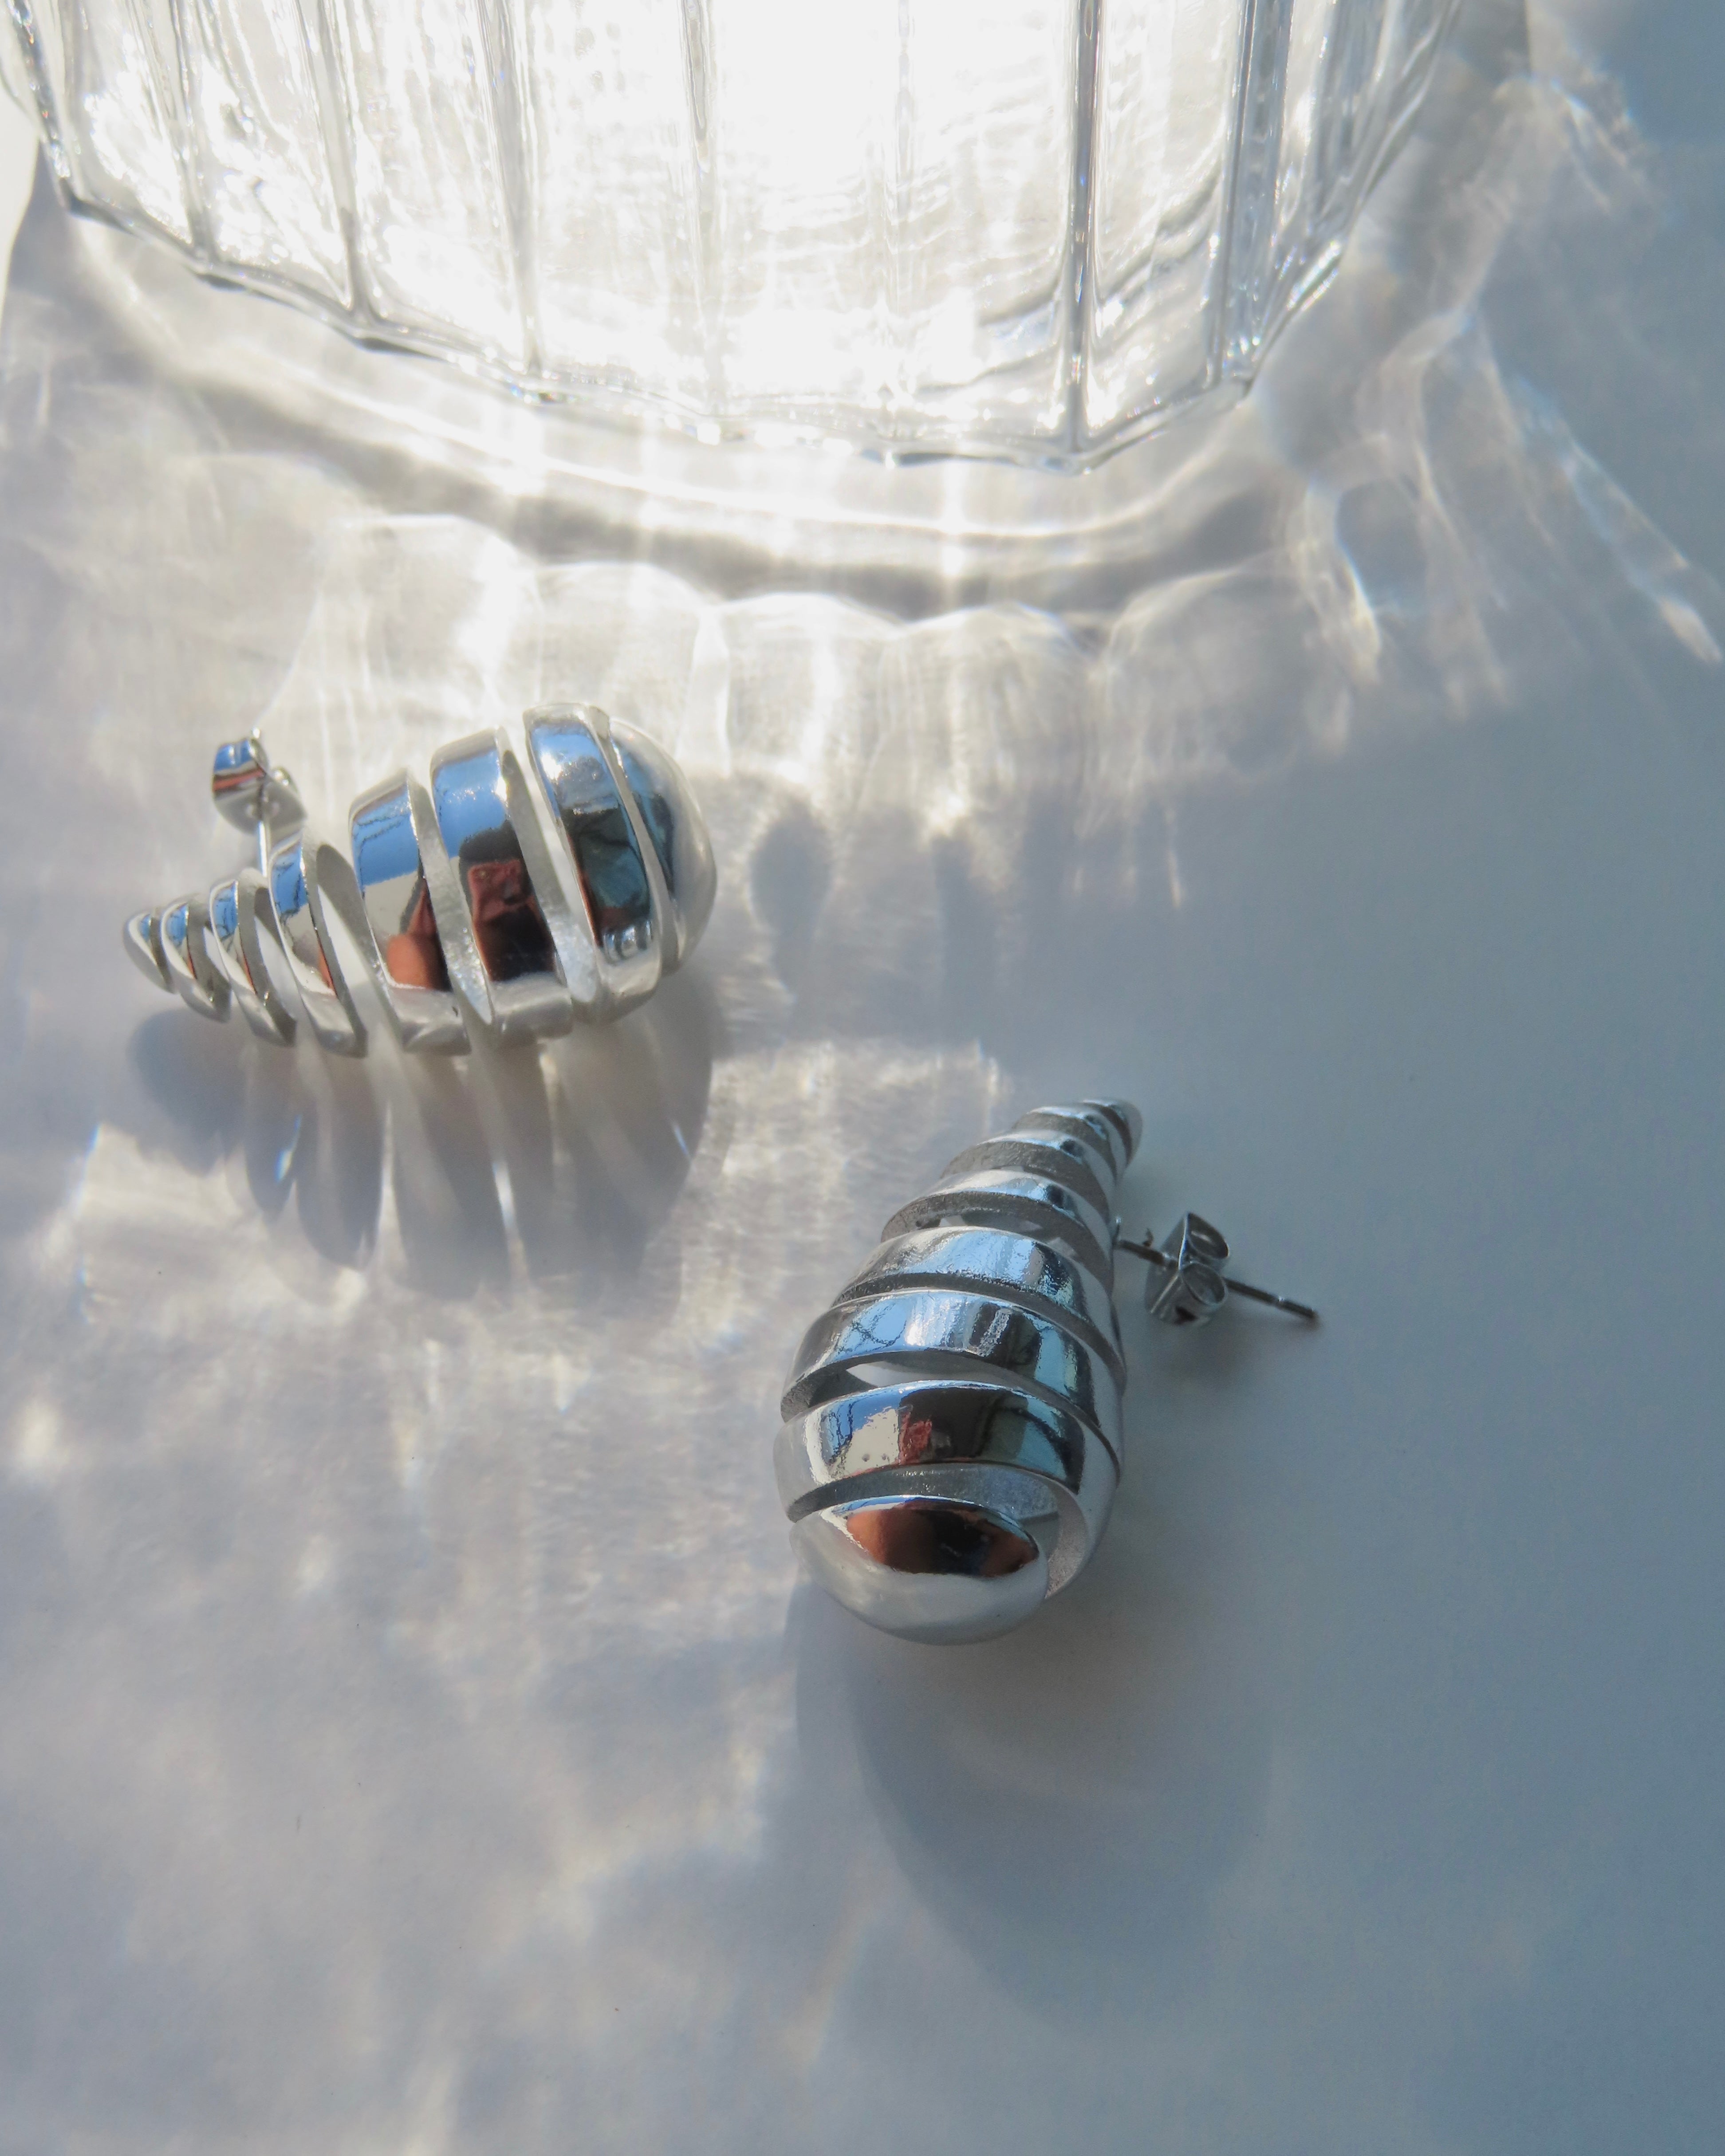 Tabbi Spiral Earrings - Silver